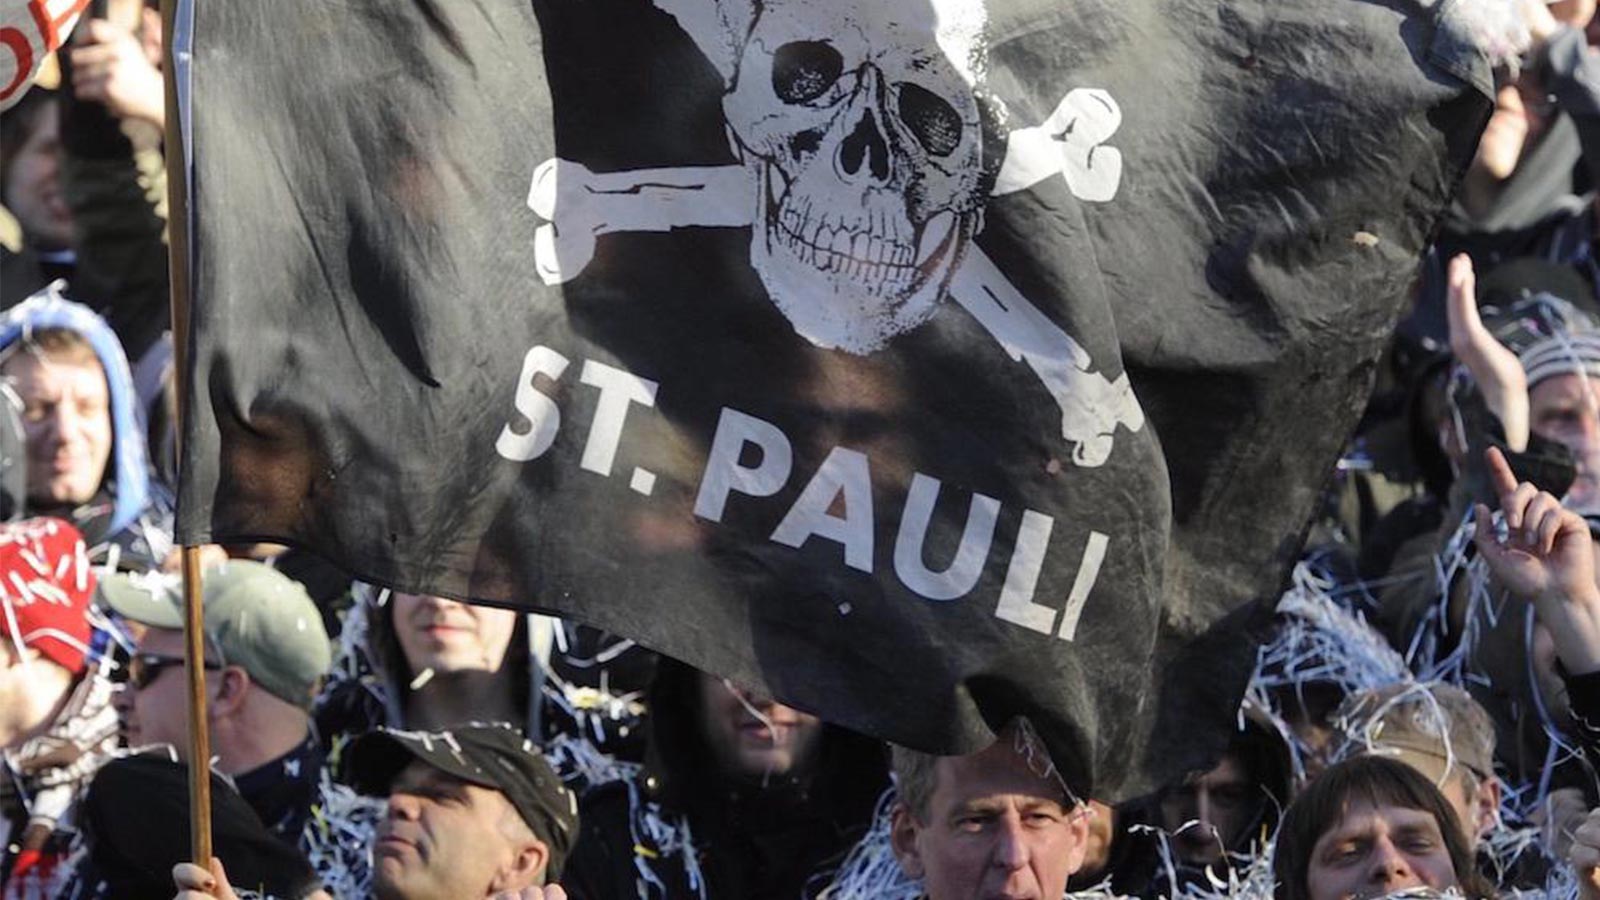 St. Pauli flag